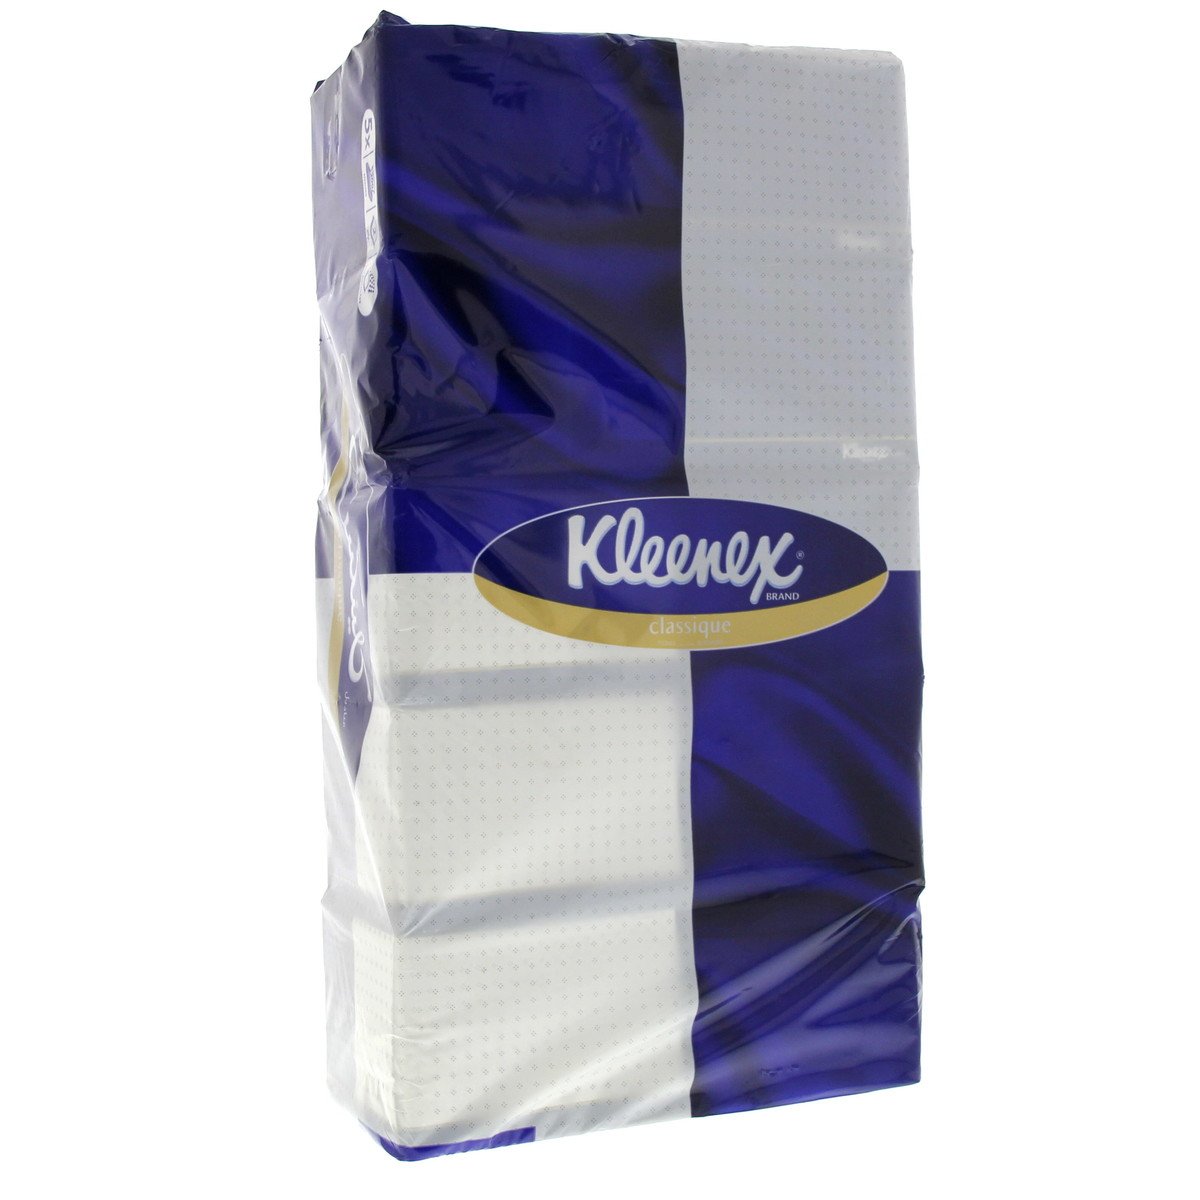 Kleenex Classique Facial Tissue 2ply 5 x 152 Sheets